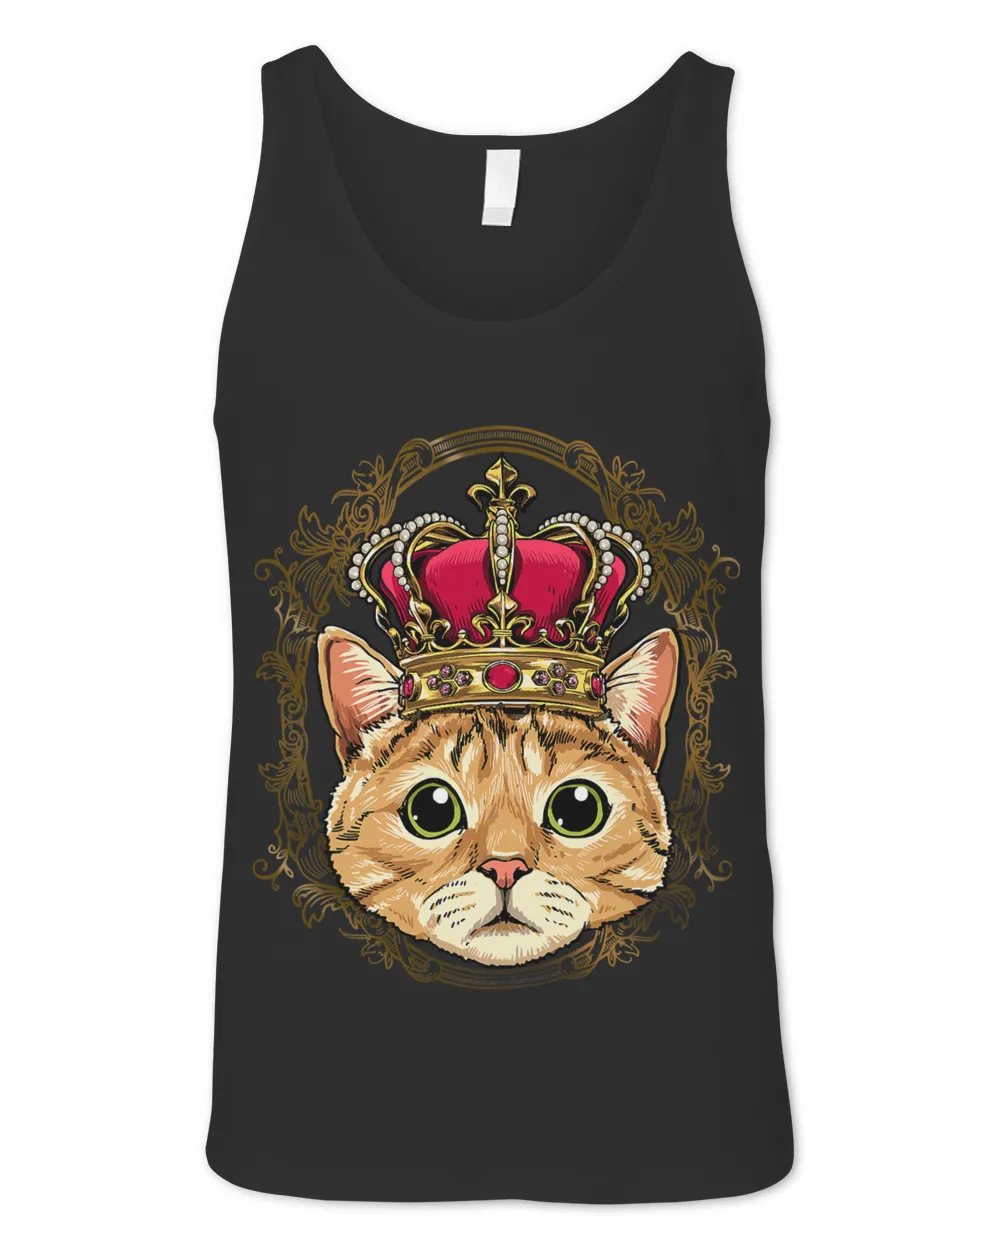 King Cat Wearing CrownQueen Cat Animal 516